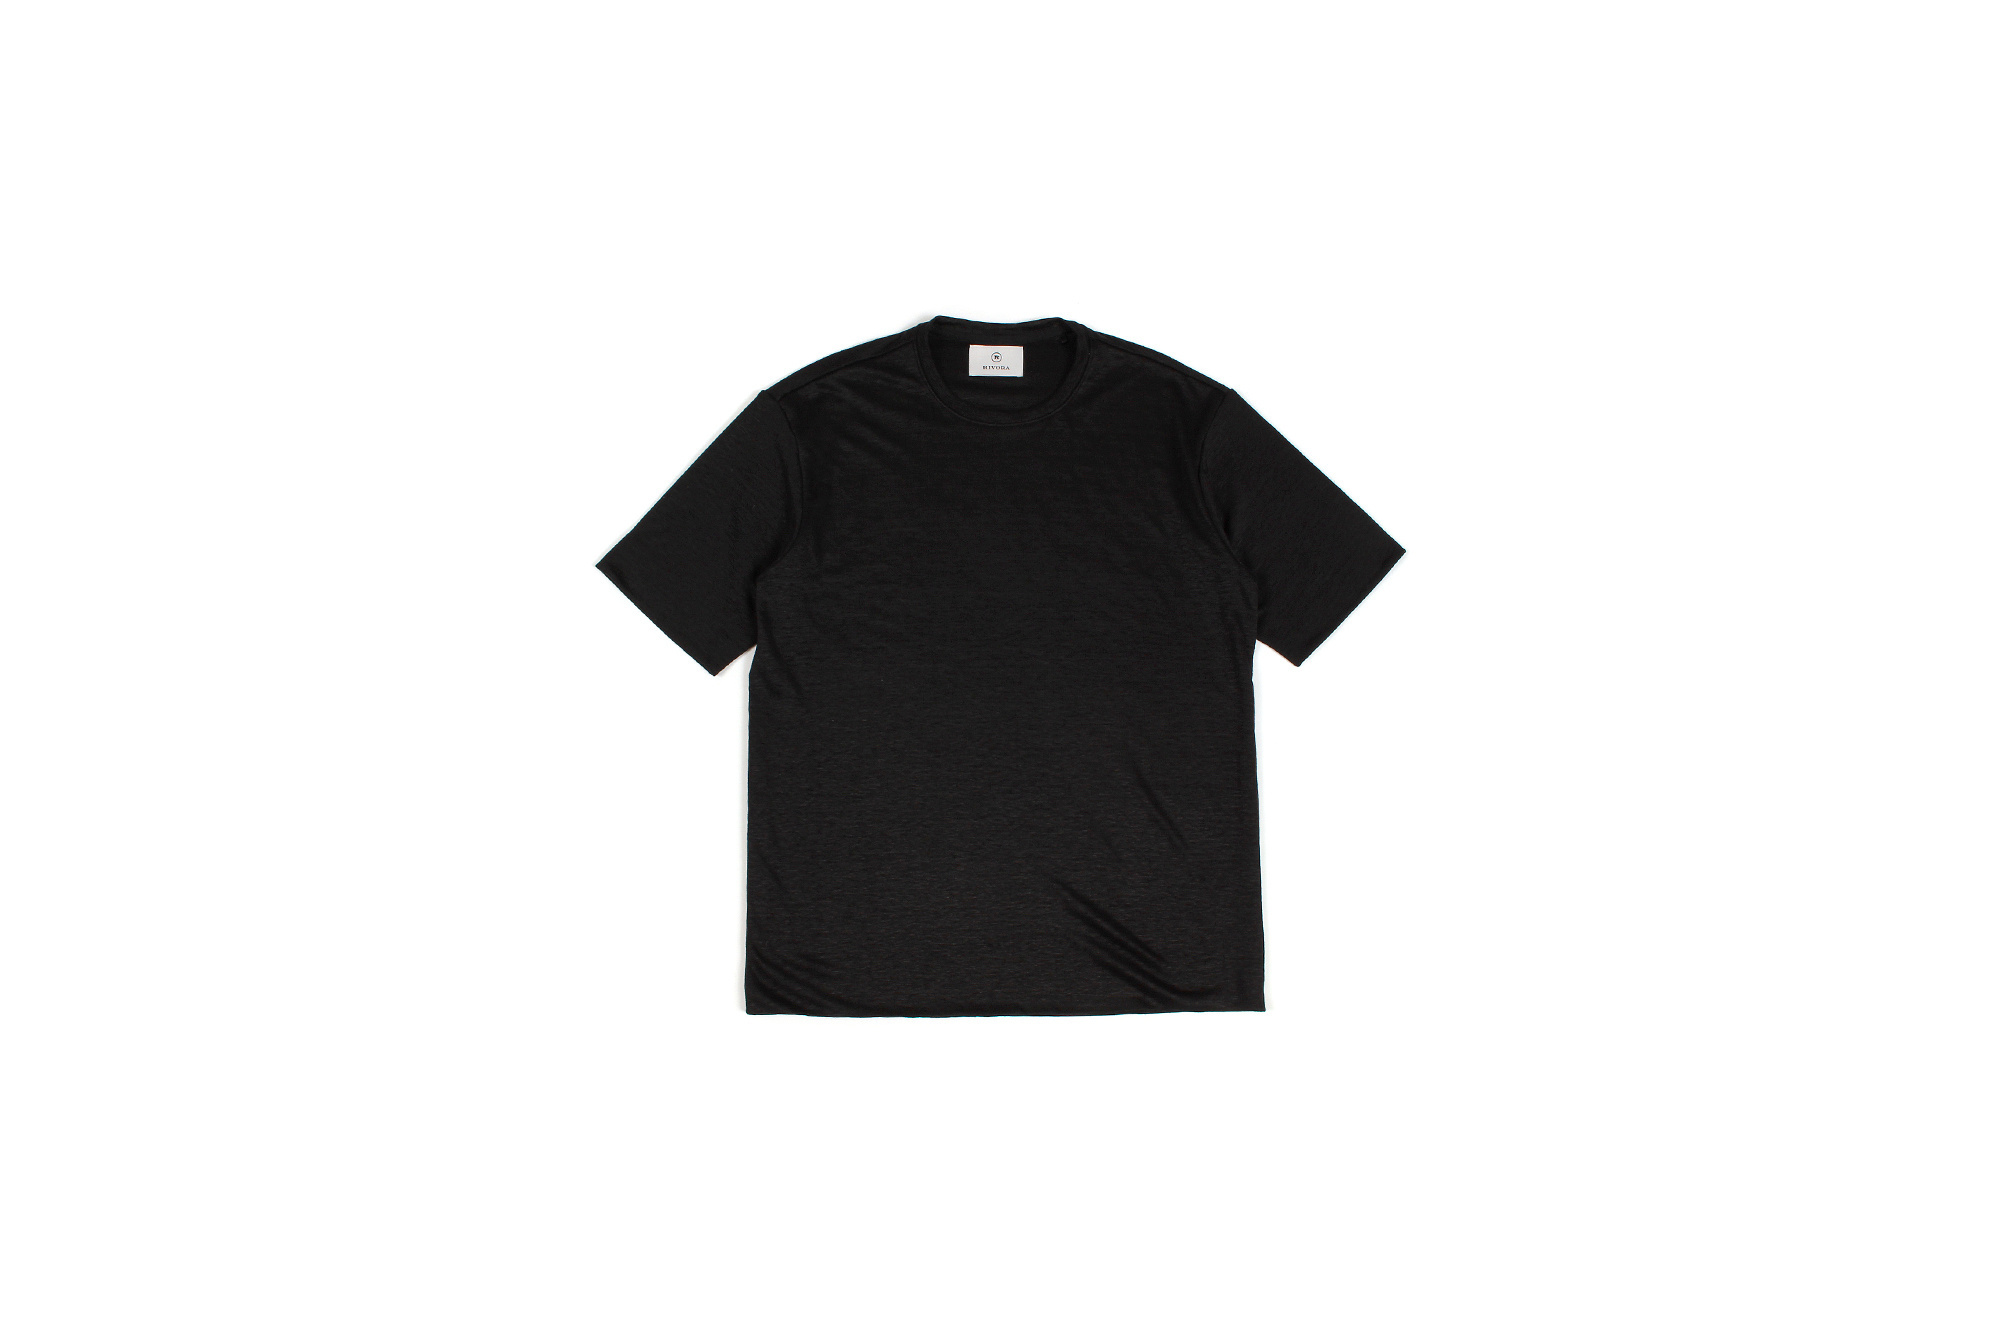 RIVORA (リヴォラ) Vintage Linen Layered T-Shirts ヴィンテージ リネン レイヤード Tシャツ BLACK (ブラック・010) MADE IN JAPAN (日本製) 2022 春夏新作 愛知 名古屋 Alto e Diritto altoediritto アルトエデリット TEE